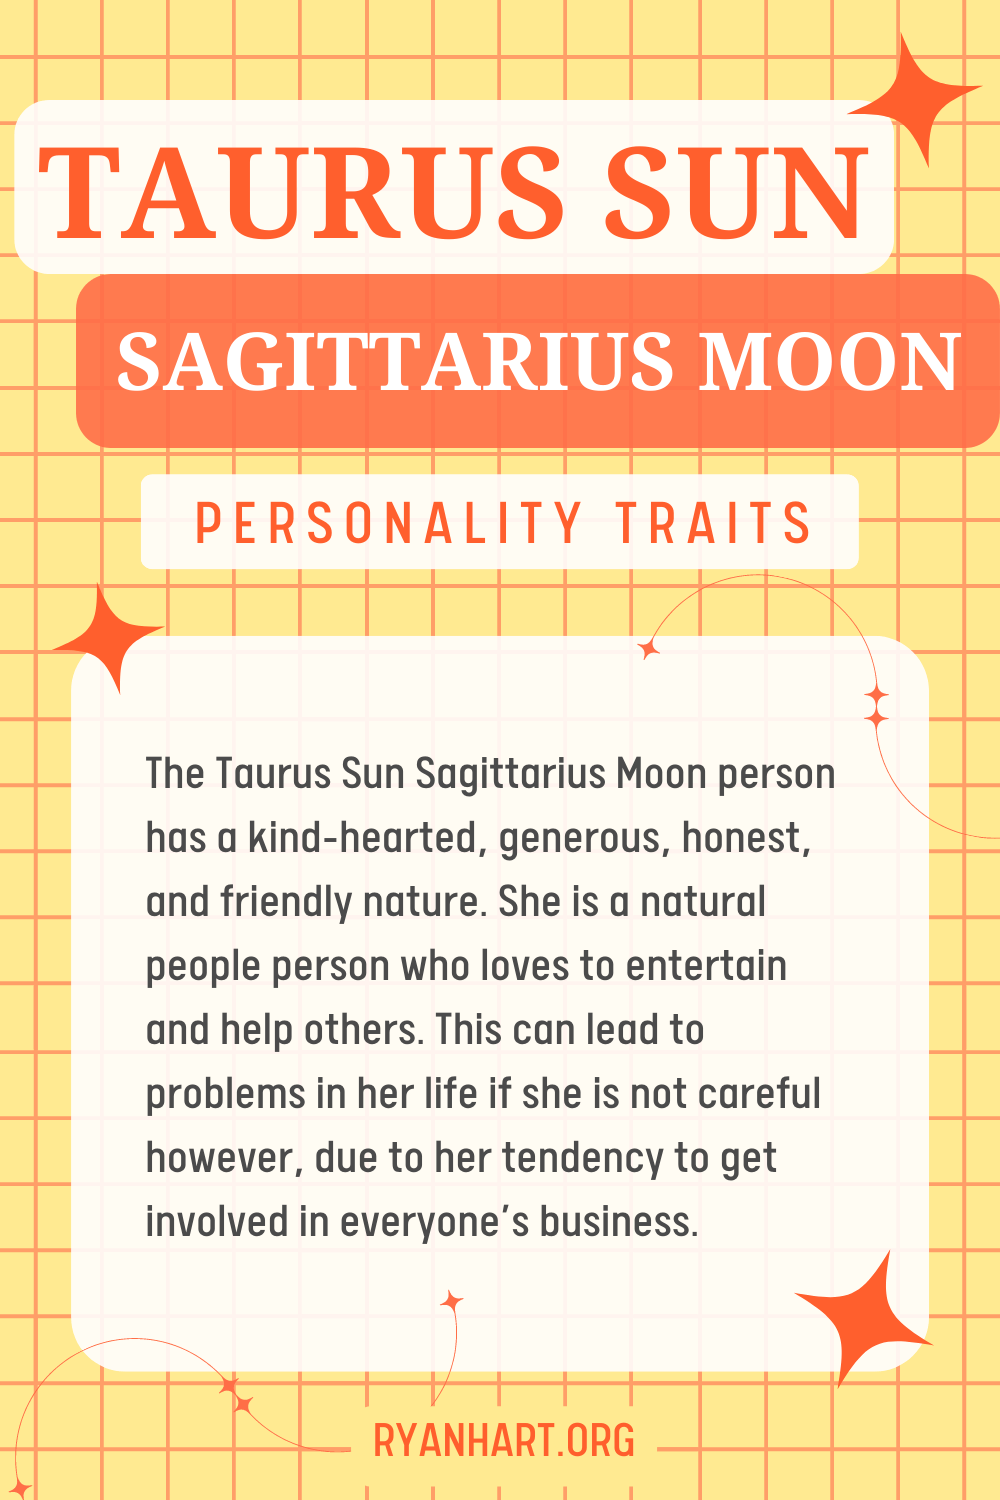  Taurus Sun Sagittarius လ စရိုက်လက္ခဏာများ